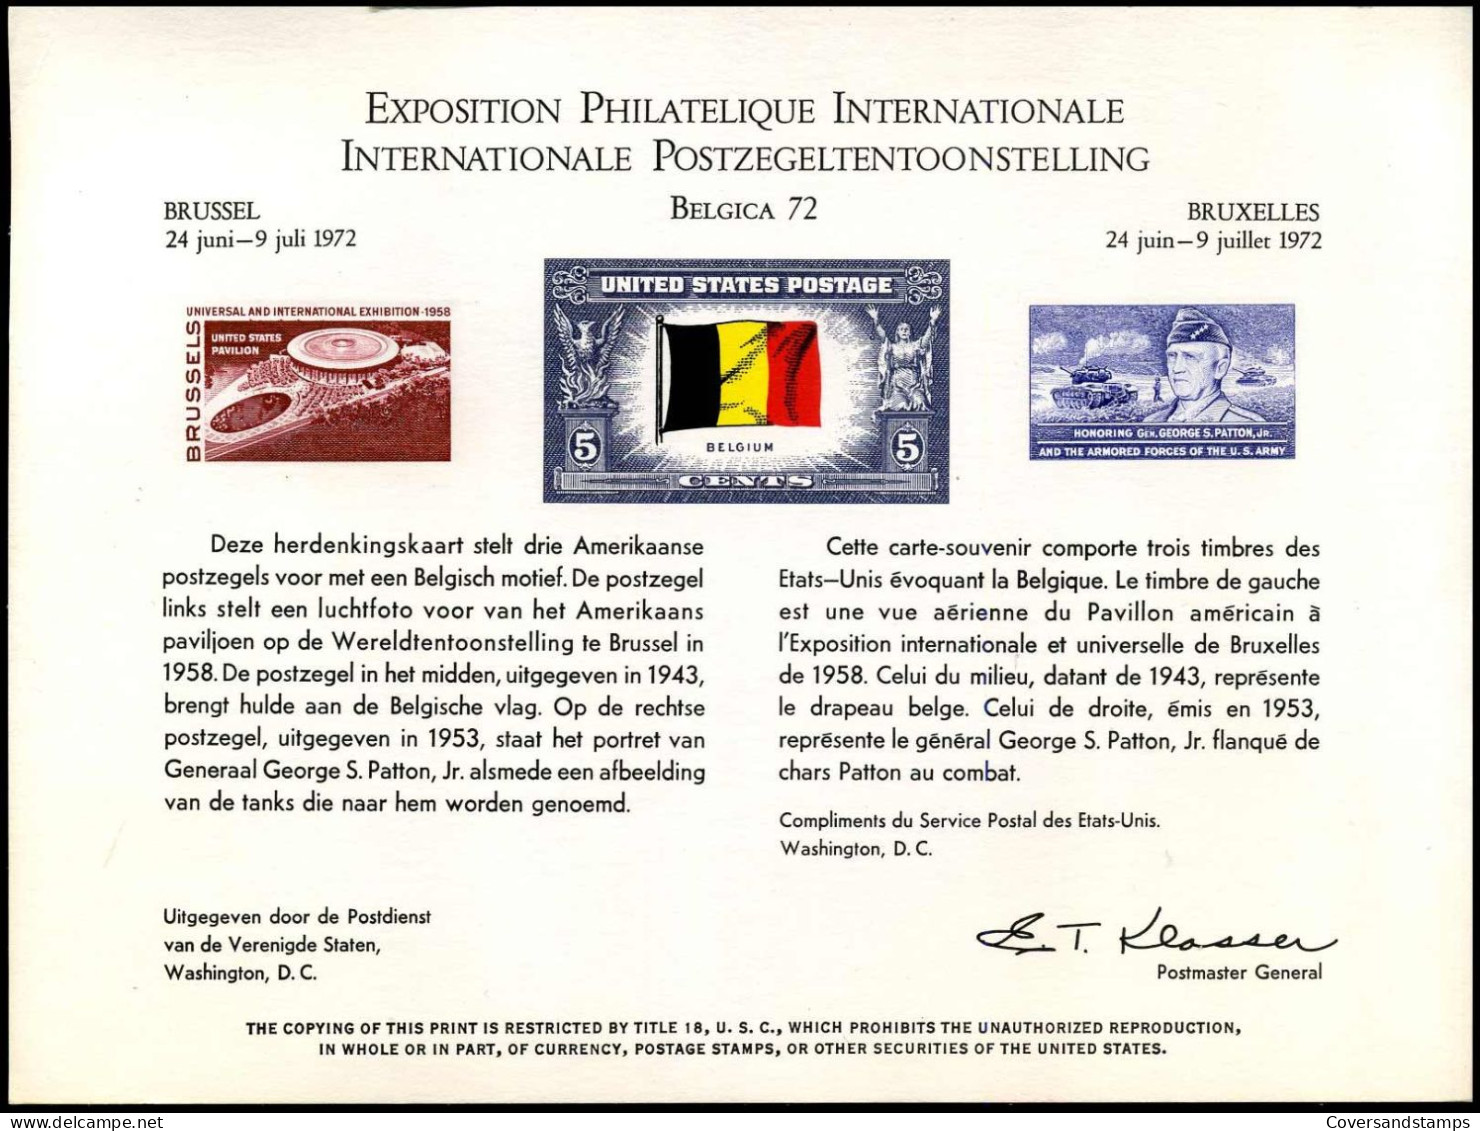 Belgica 72 - Internationale Postzegeltentoonstelling - United States Postage - Souvenir Cards - Joint Issues [HK]